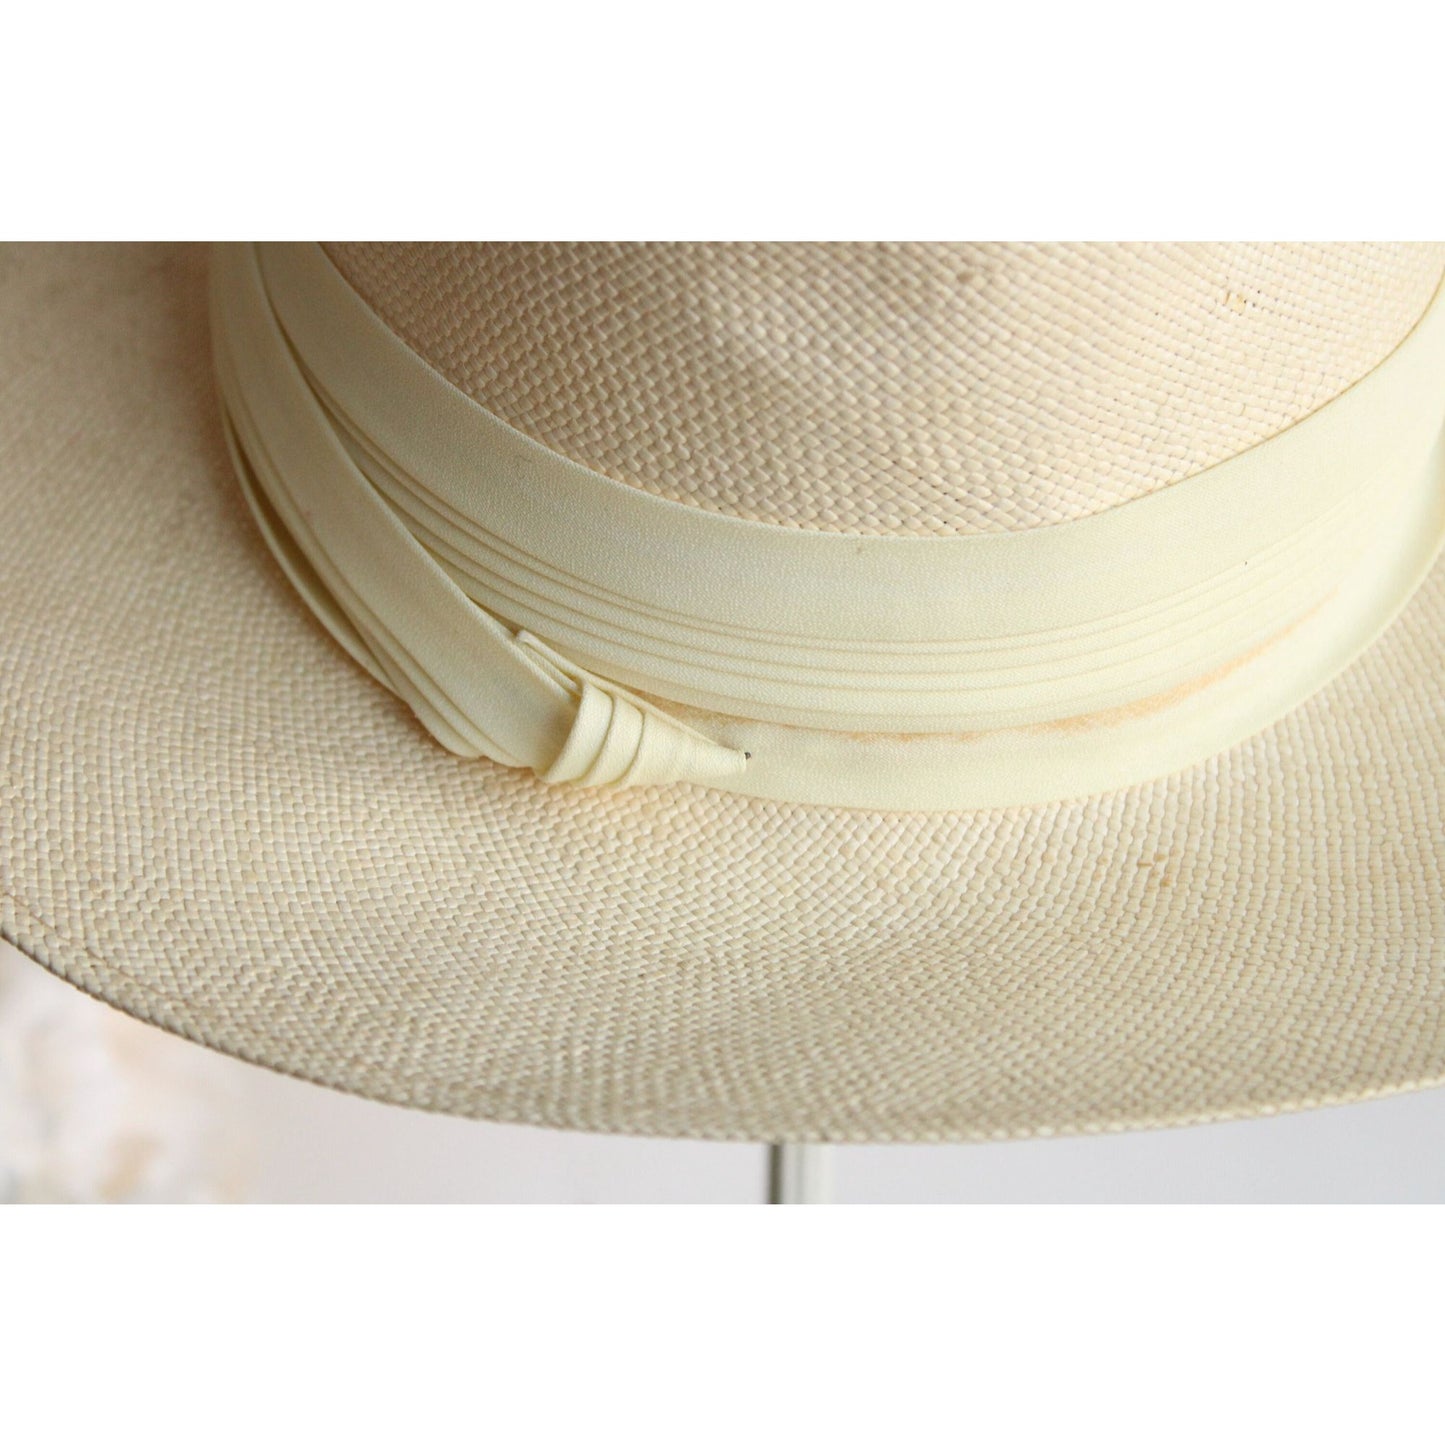 Vintage Mens Straw Hat Pacific Panama